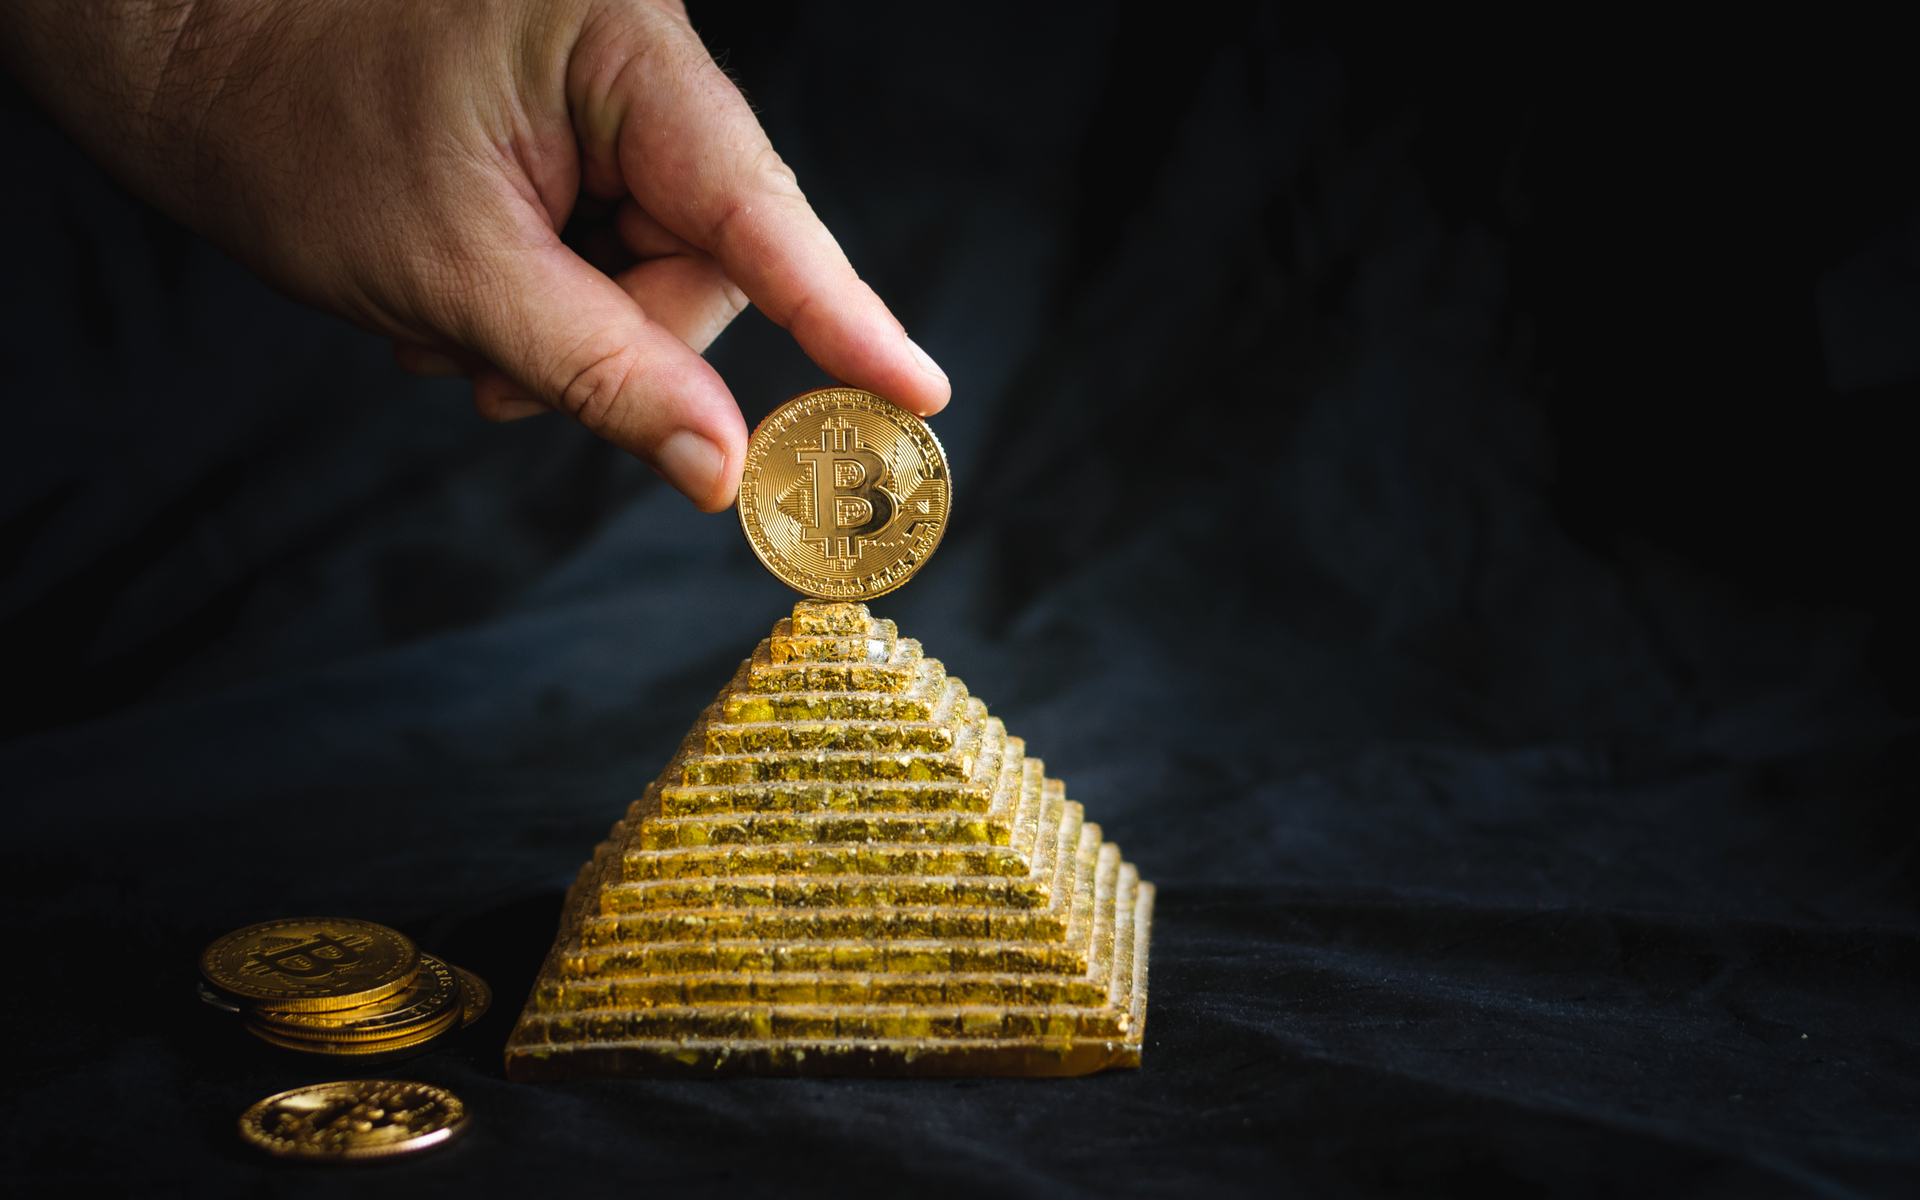 bitcoin pyramid scheme scam